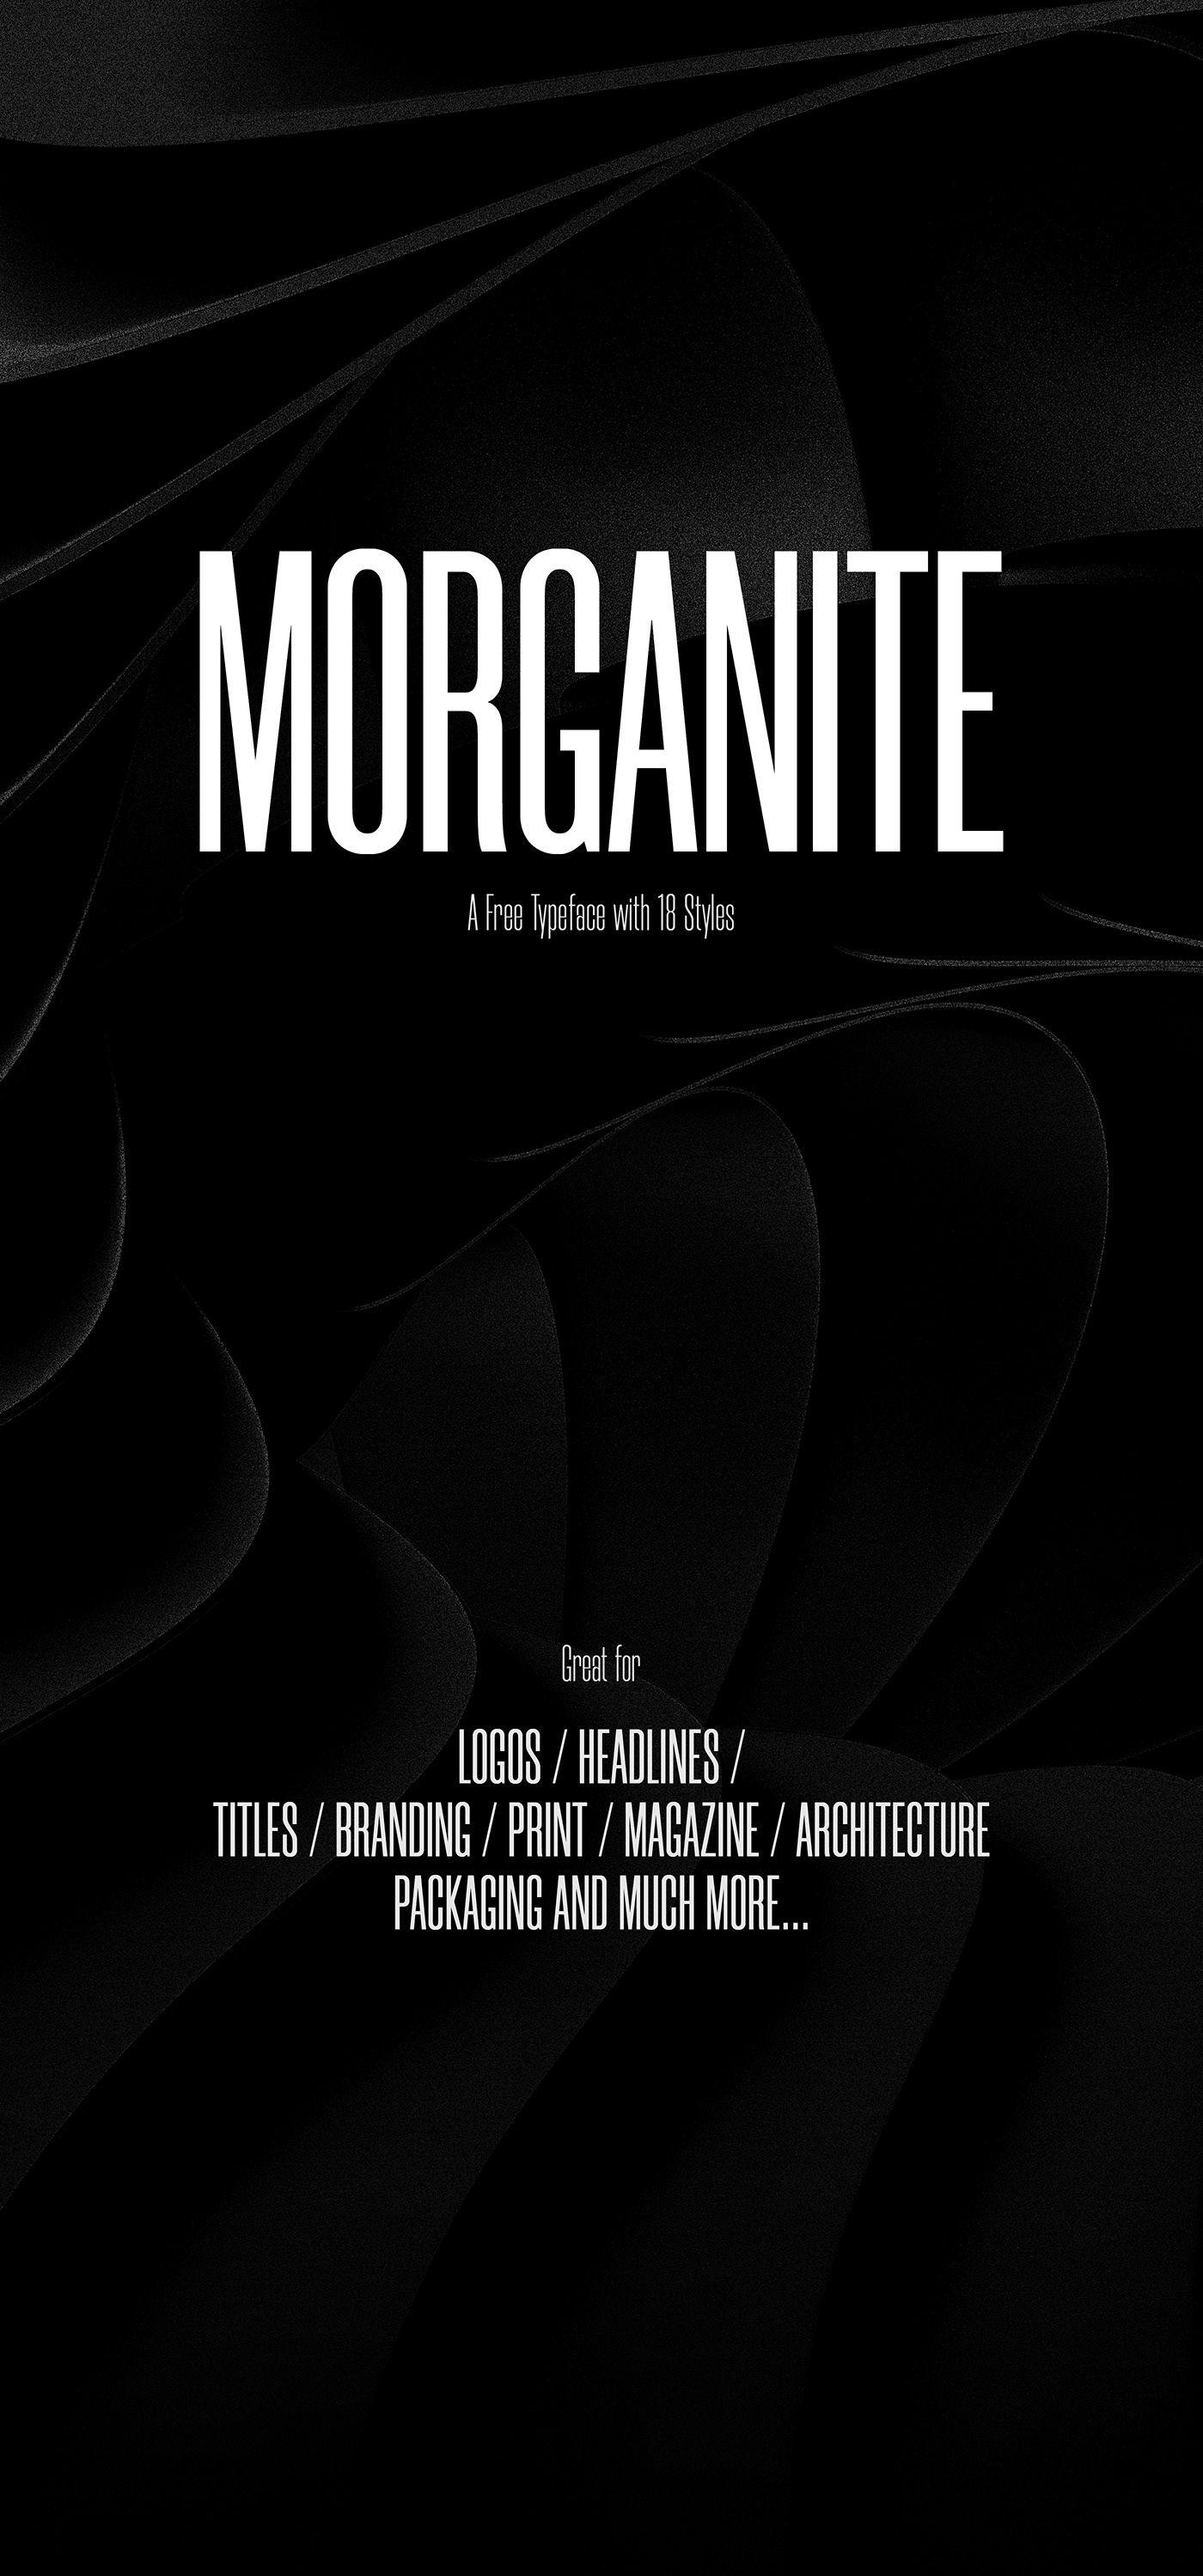 Guinness Font Logo - Morganite© / Free Typeface / 18 Styles on Behance